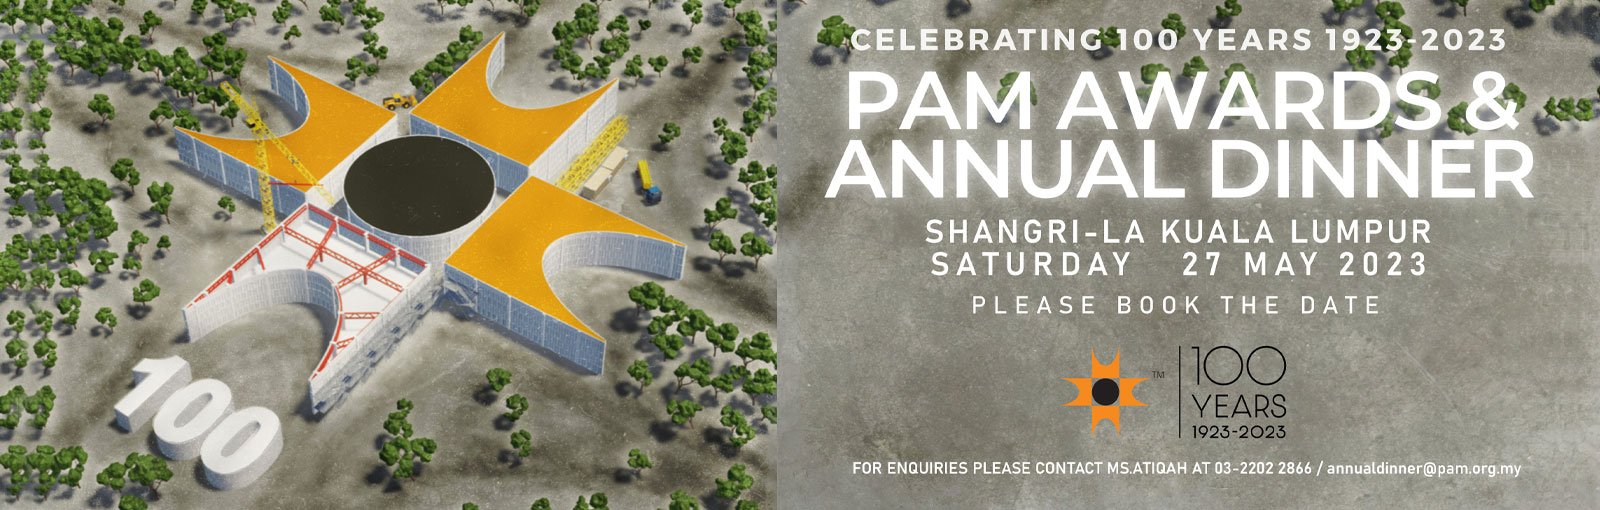 PAM Awards & Annual Dinner 2023